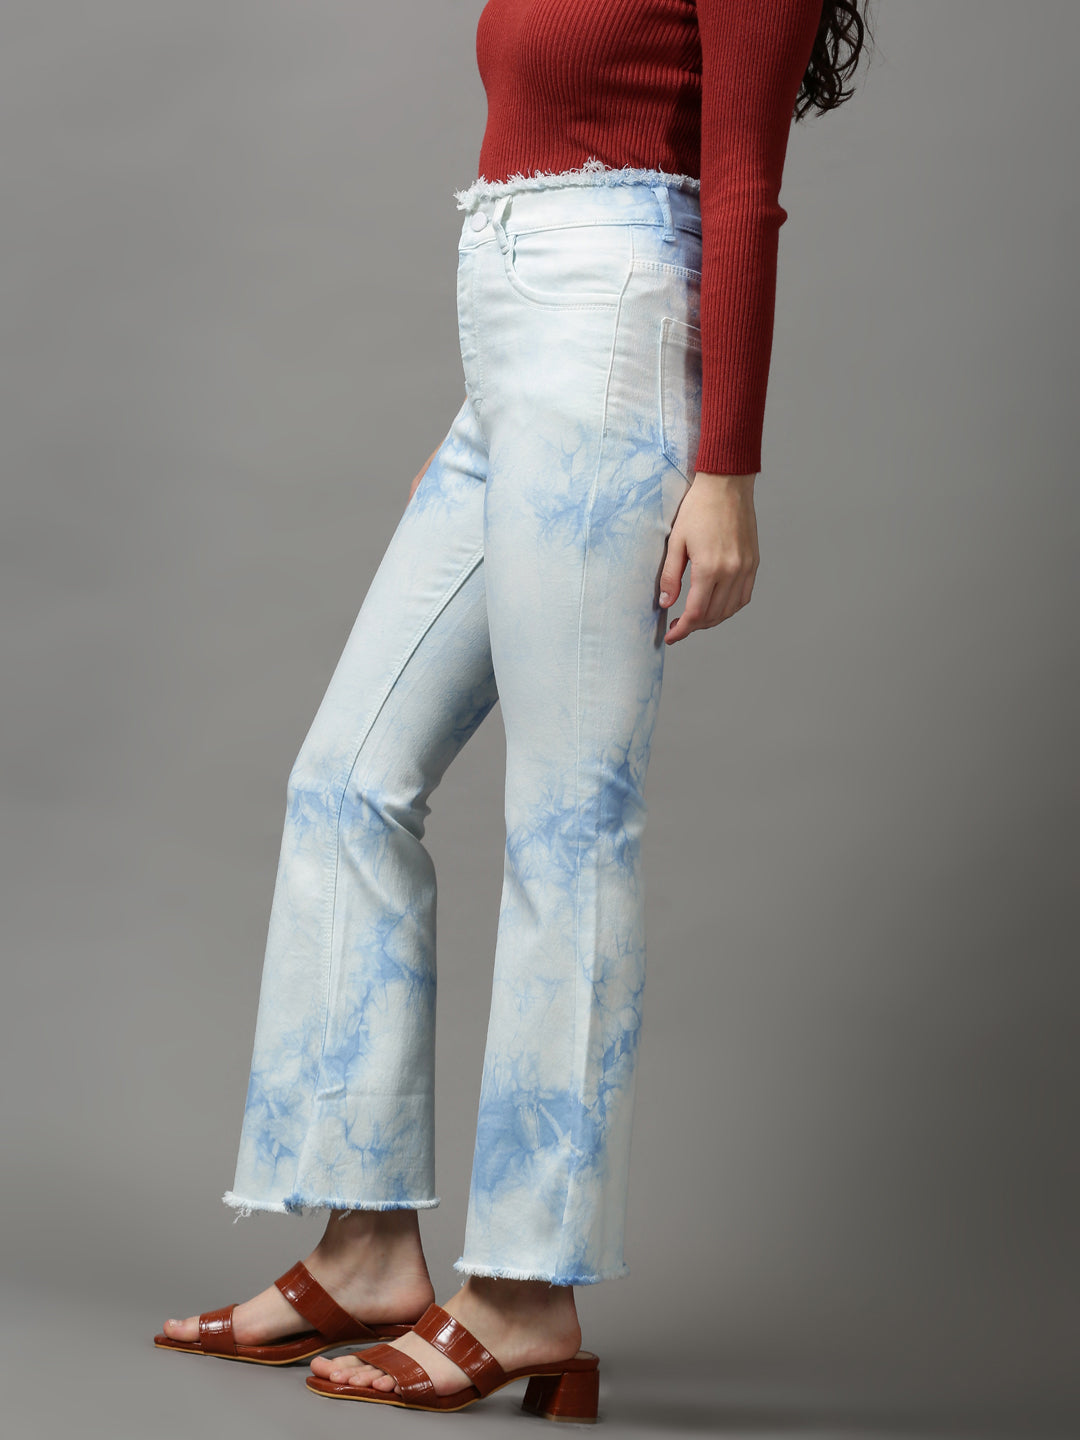 Women's Blue Solid Bootcut Denim Jeans